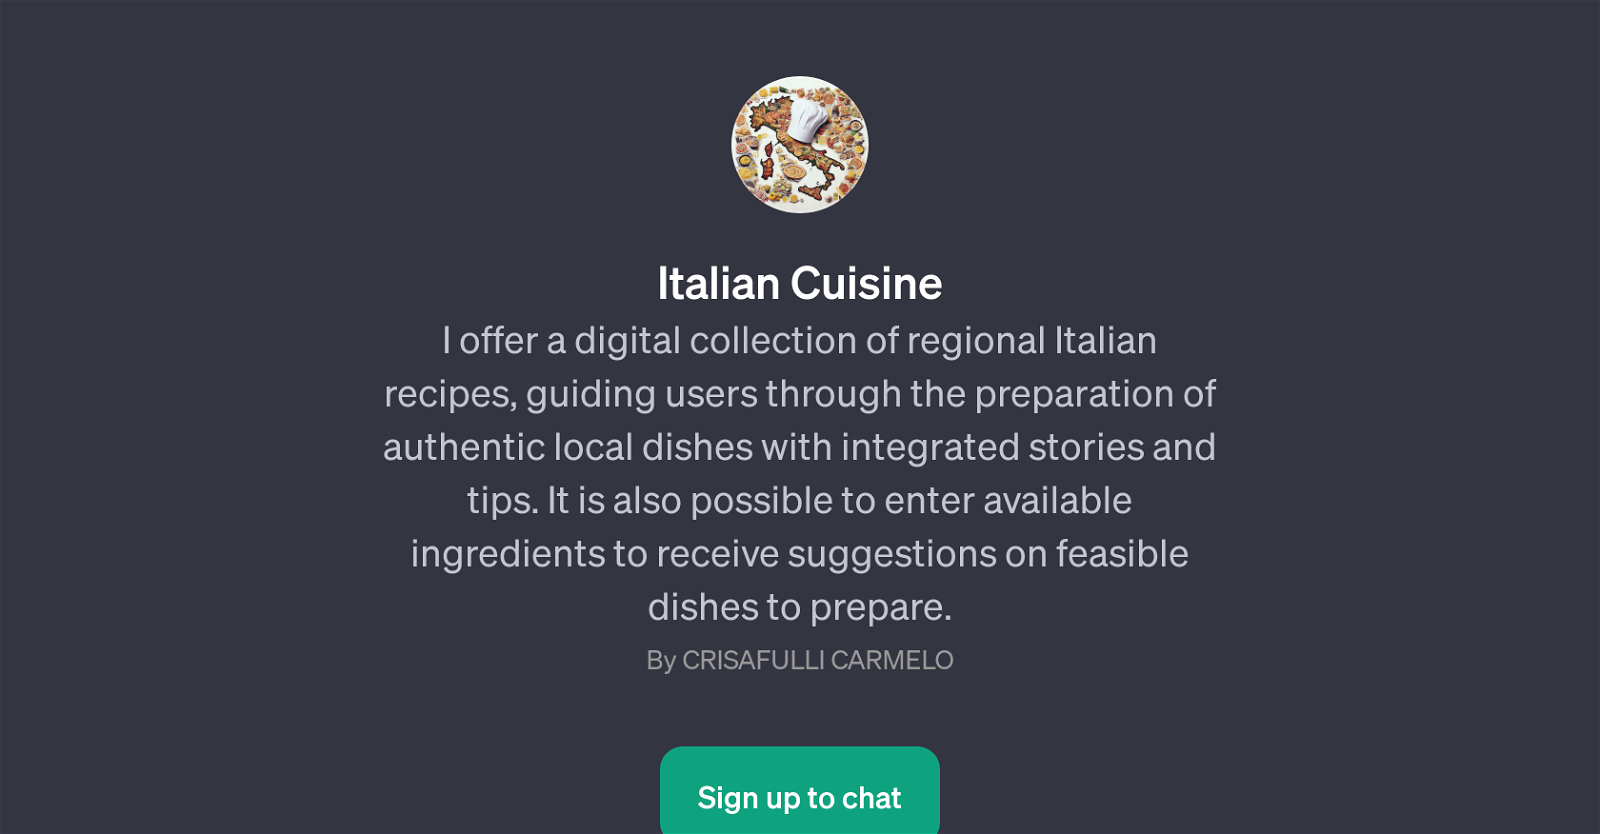 Italian Cuisine website